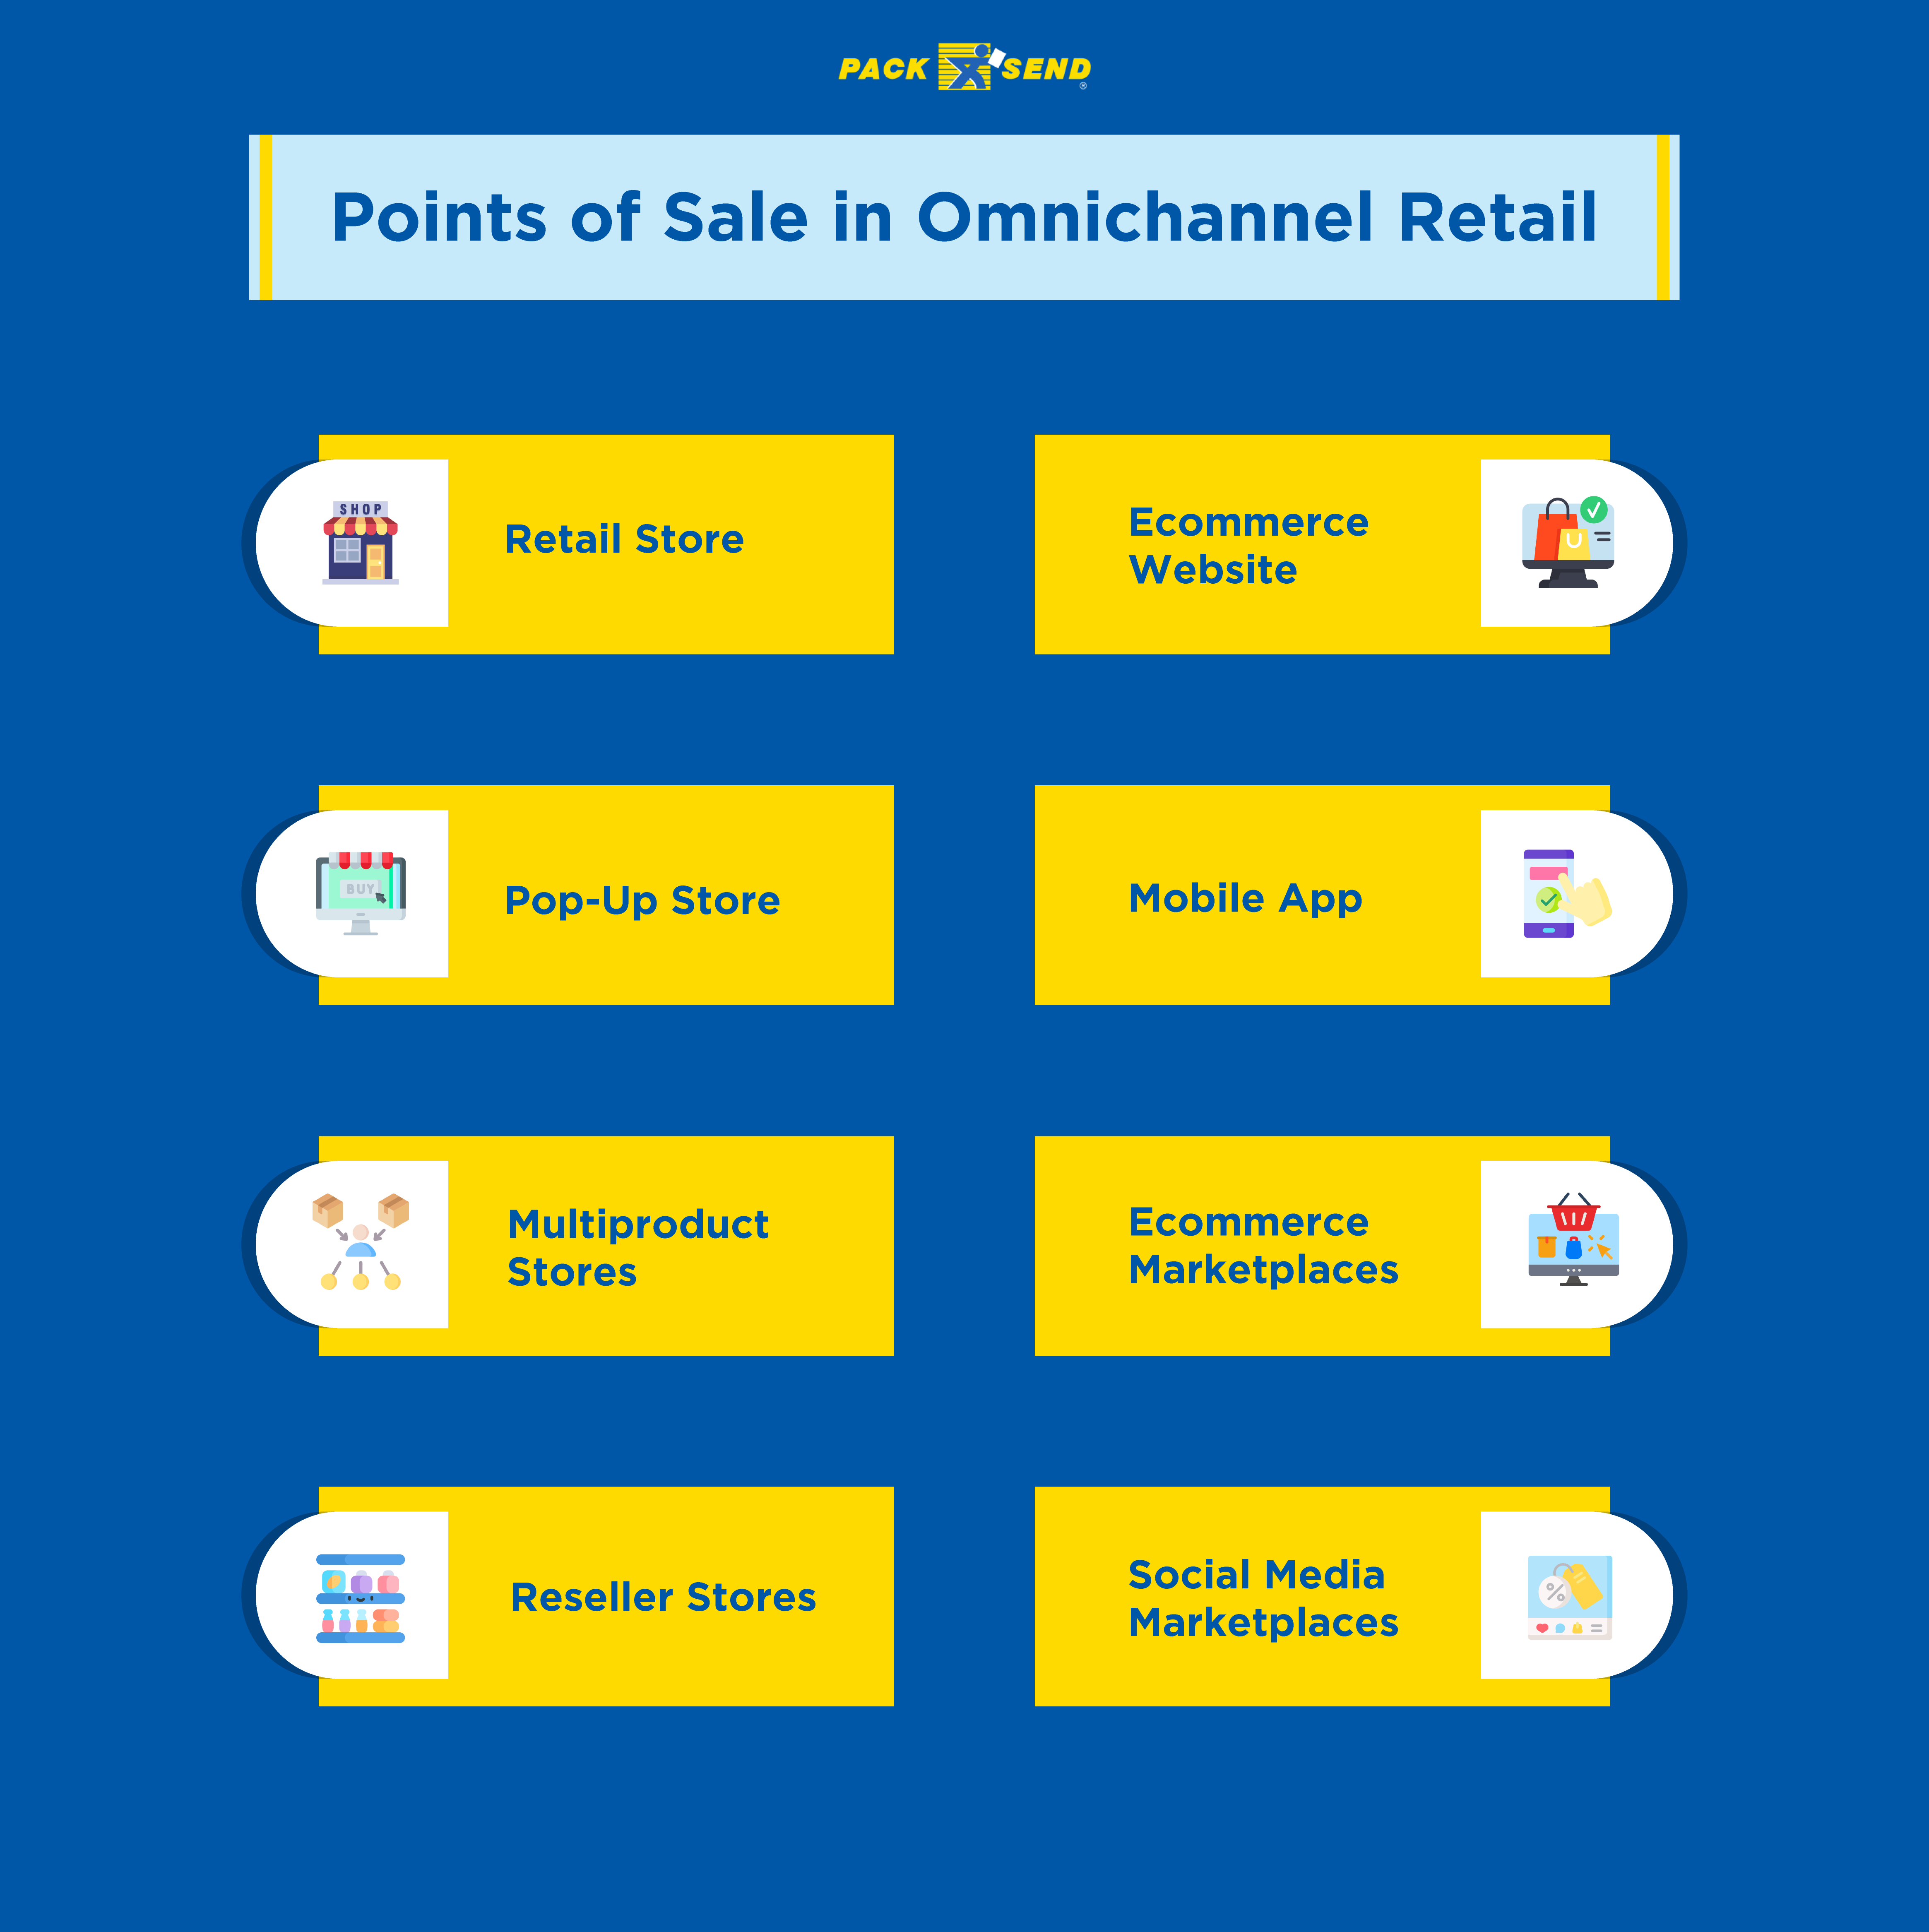 Points of Sale in Omnichannel Retail